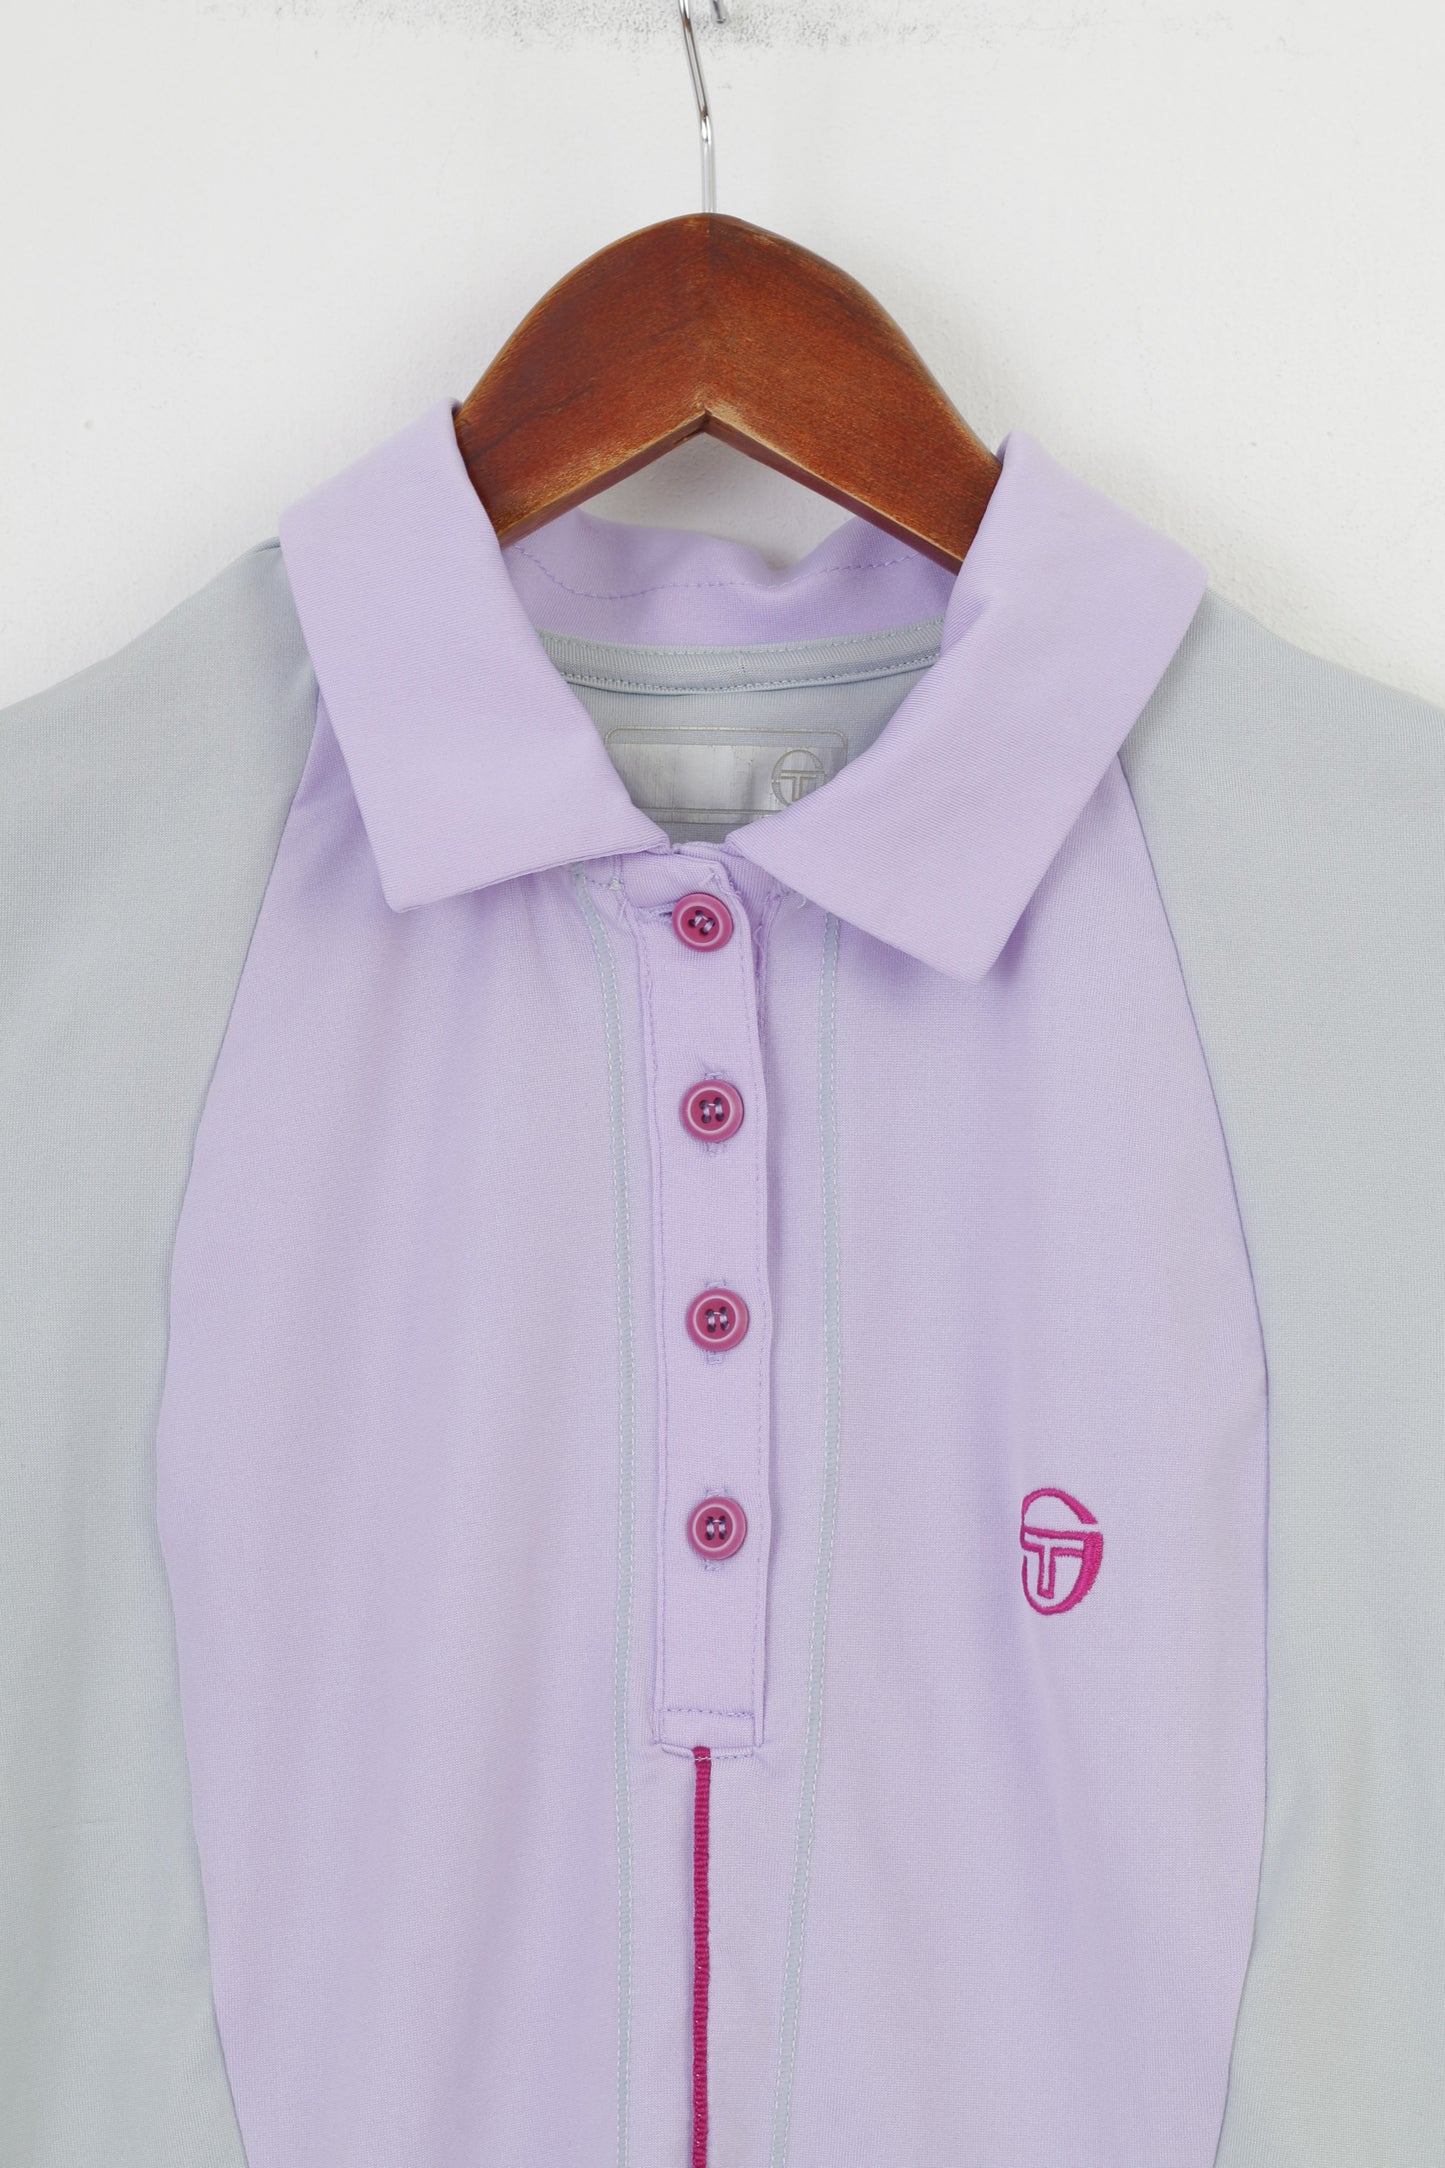 Sergio Tacchini Woman S Polo Shirt Purple Collar Short Sleeve Sportswear Sport Gym Top